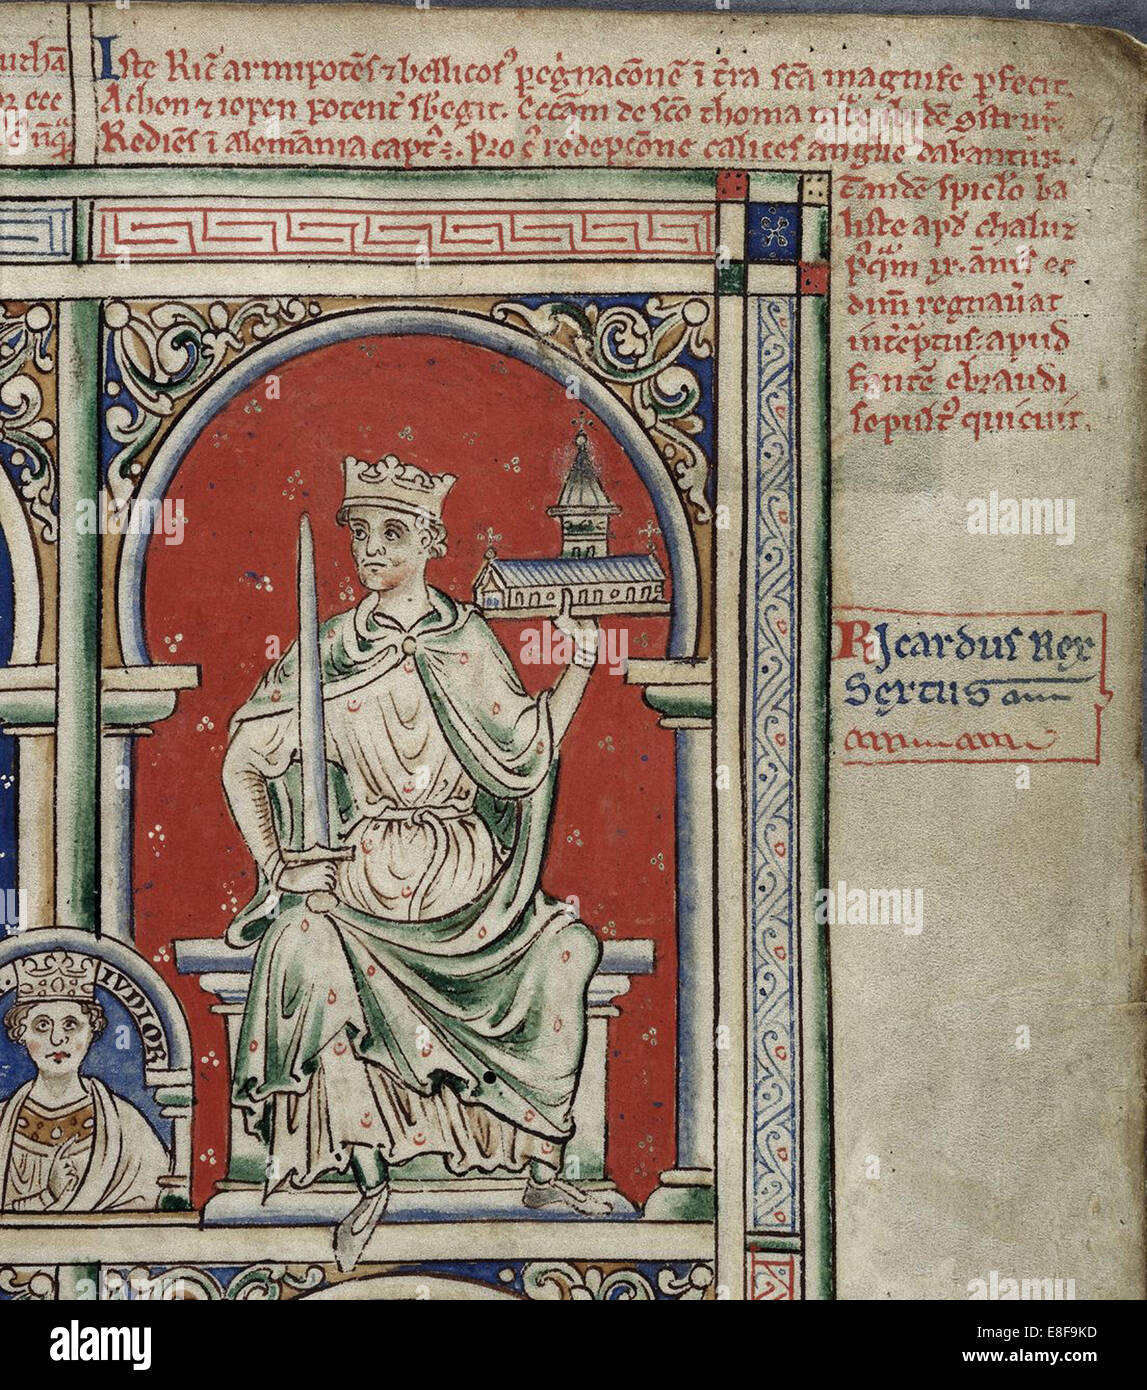 Richard I the Lionheart (From the Historia Anglorum, Chronica majora). Artist: Paris, Matthew (c. 1200-1259) Stock Photo